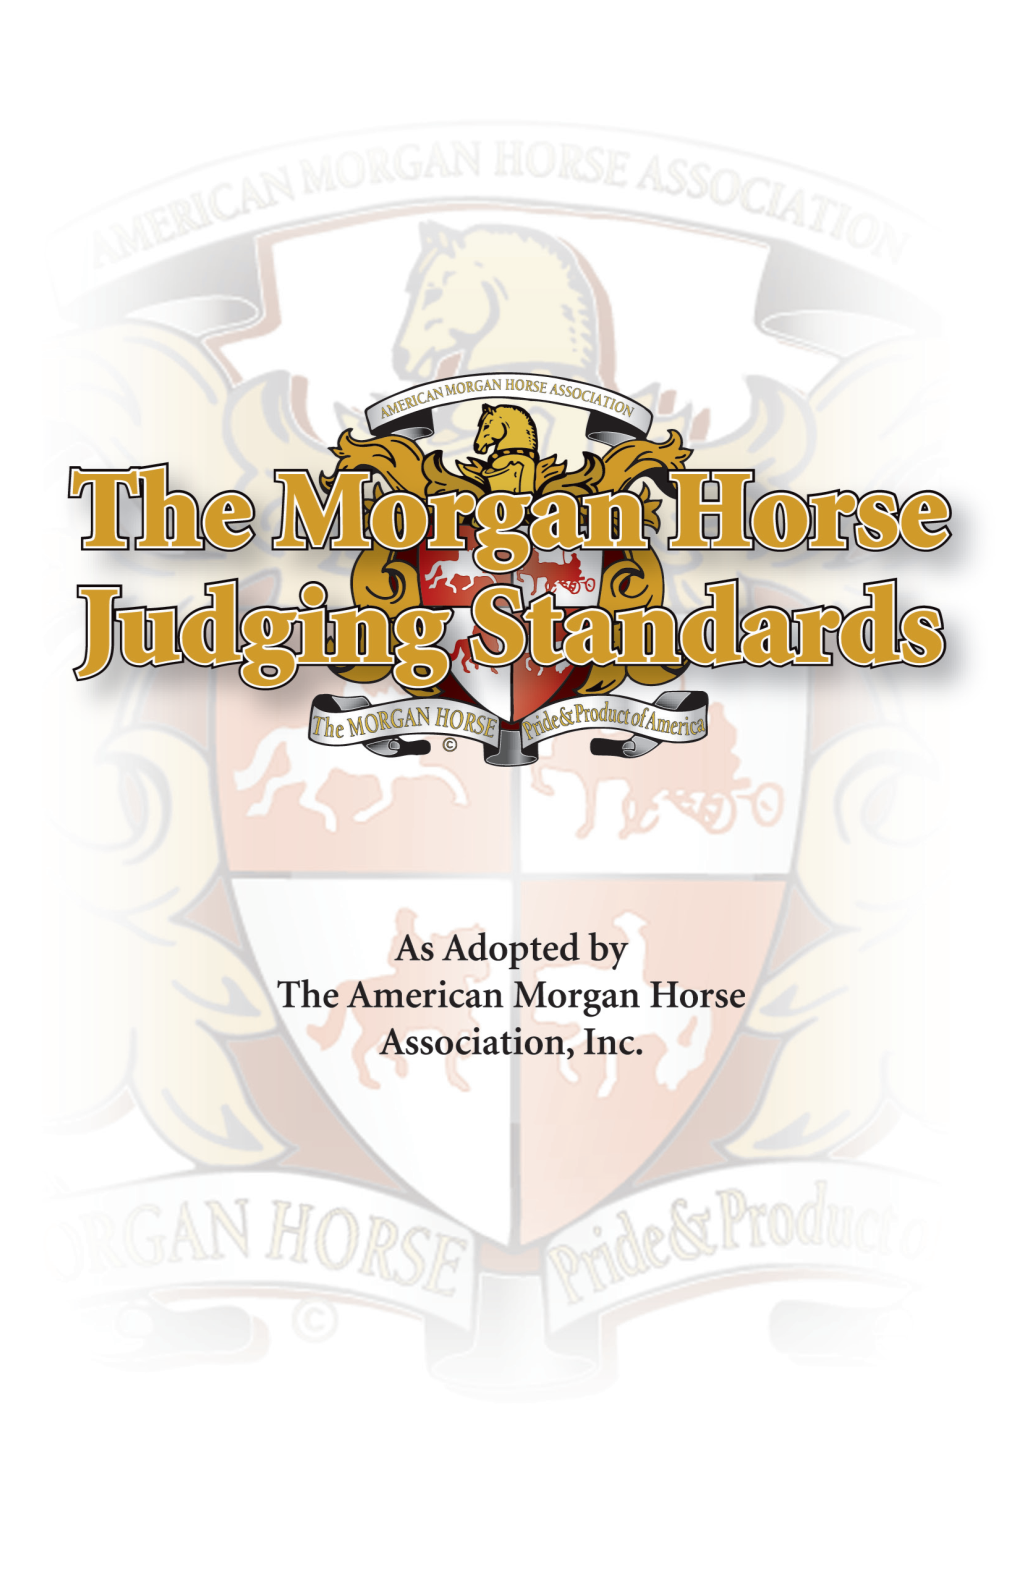 The Morgan Horse Judging Standards